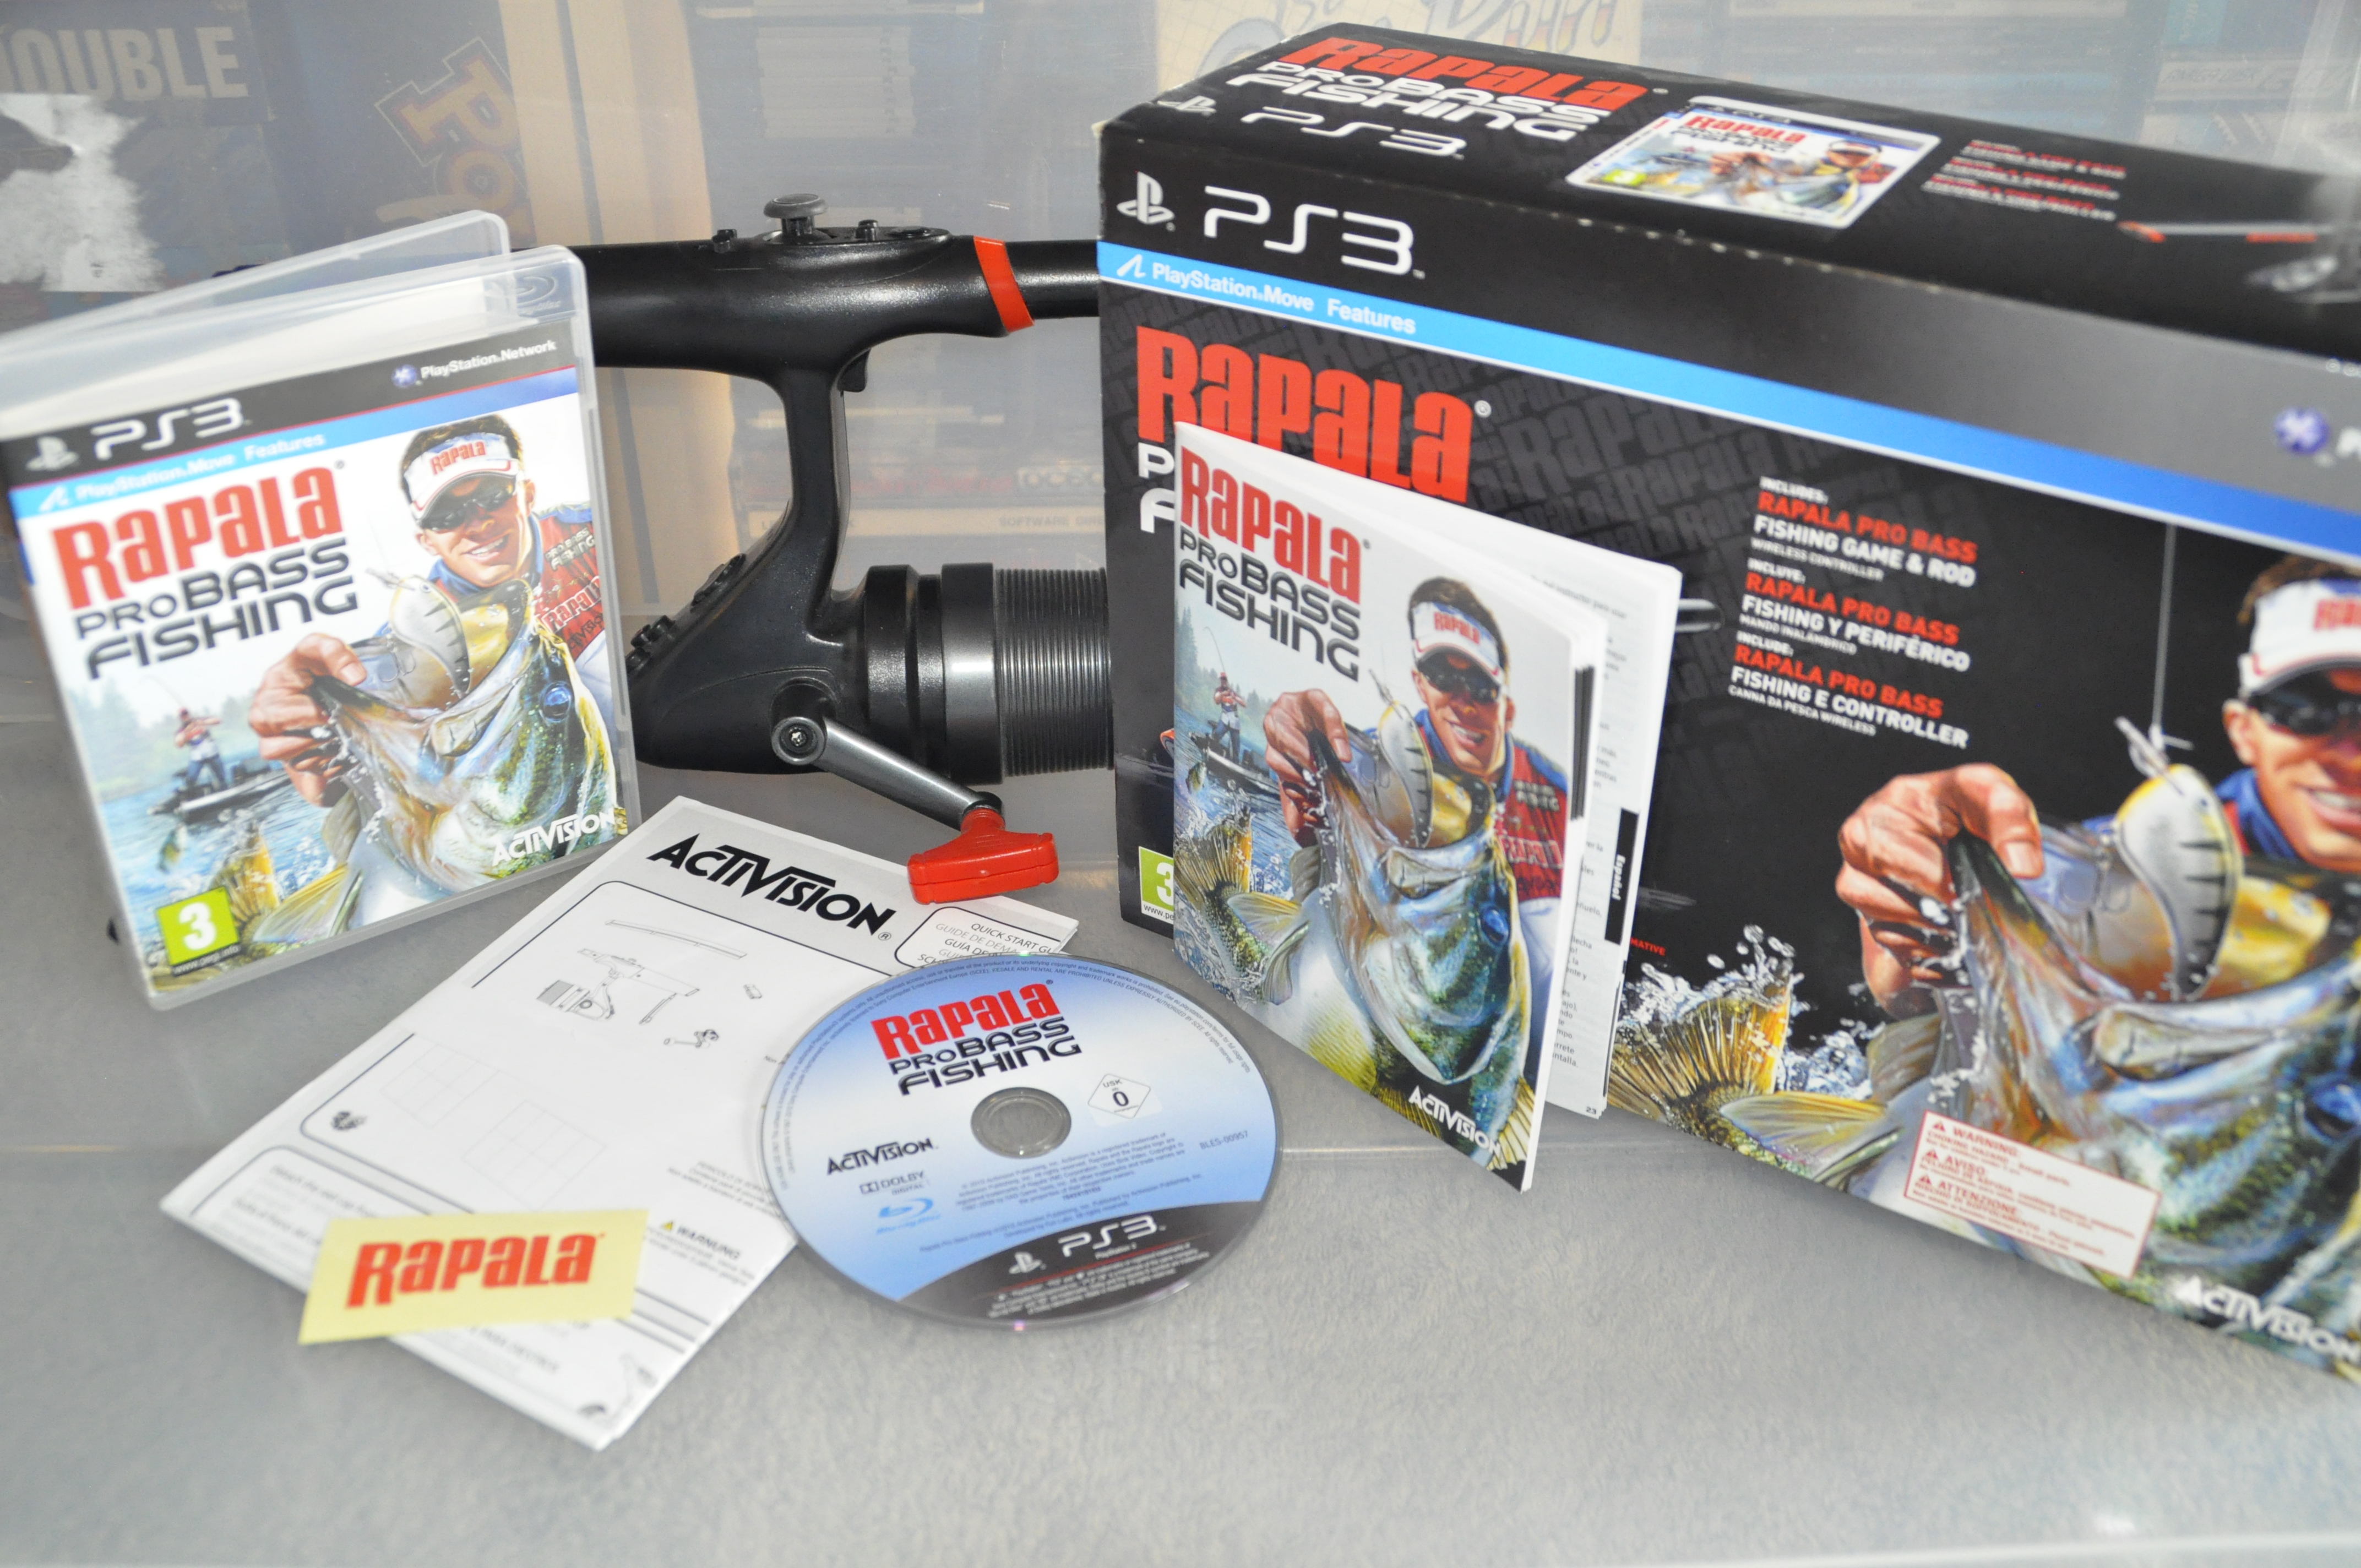 Fishing Without A Wire - Rapala Pro Bass Fishing PS3 • AmigaGuru's